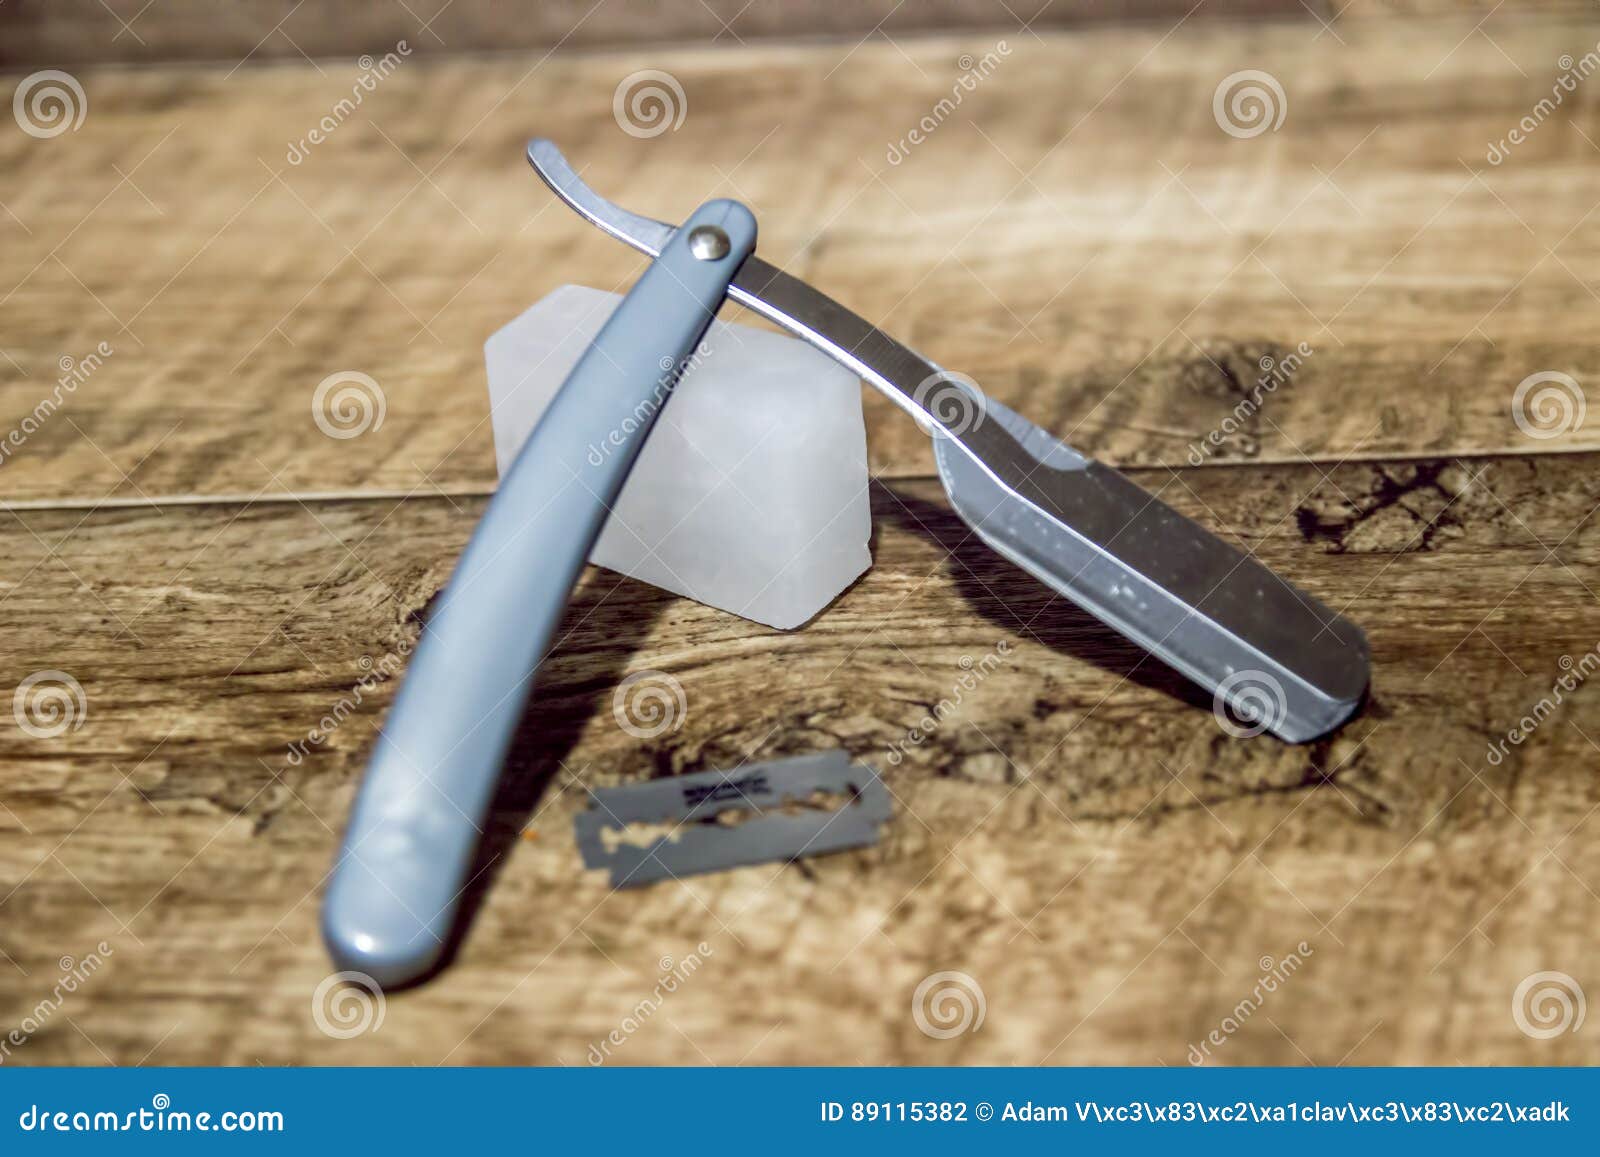 razor blade and alum